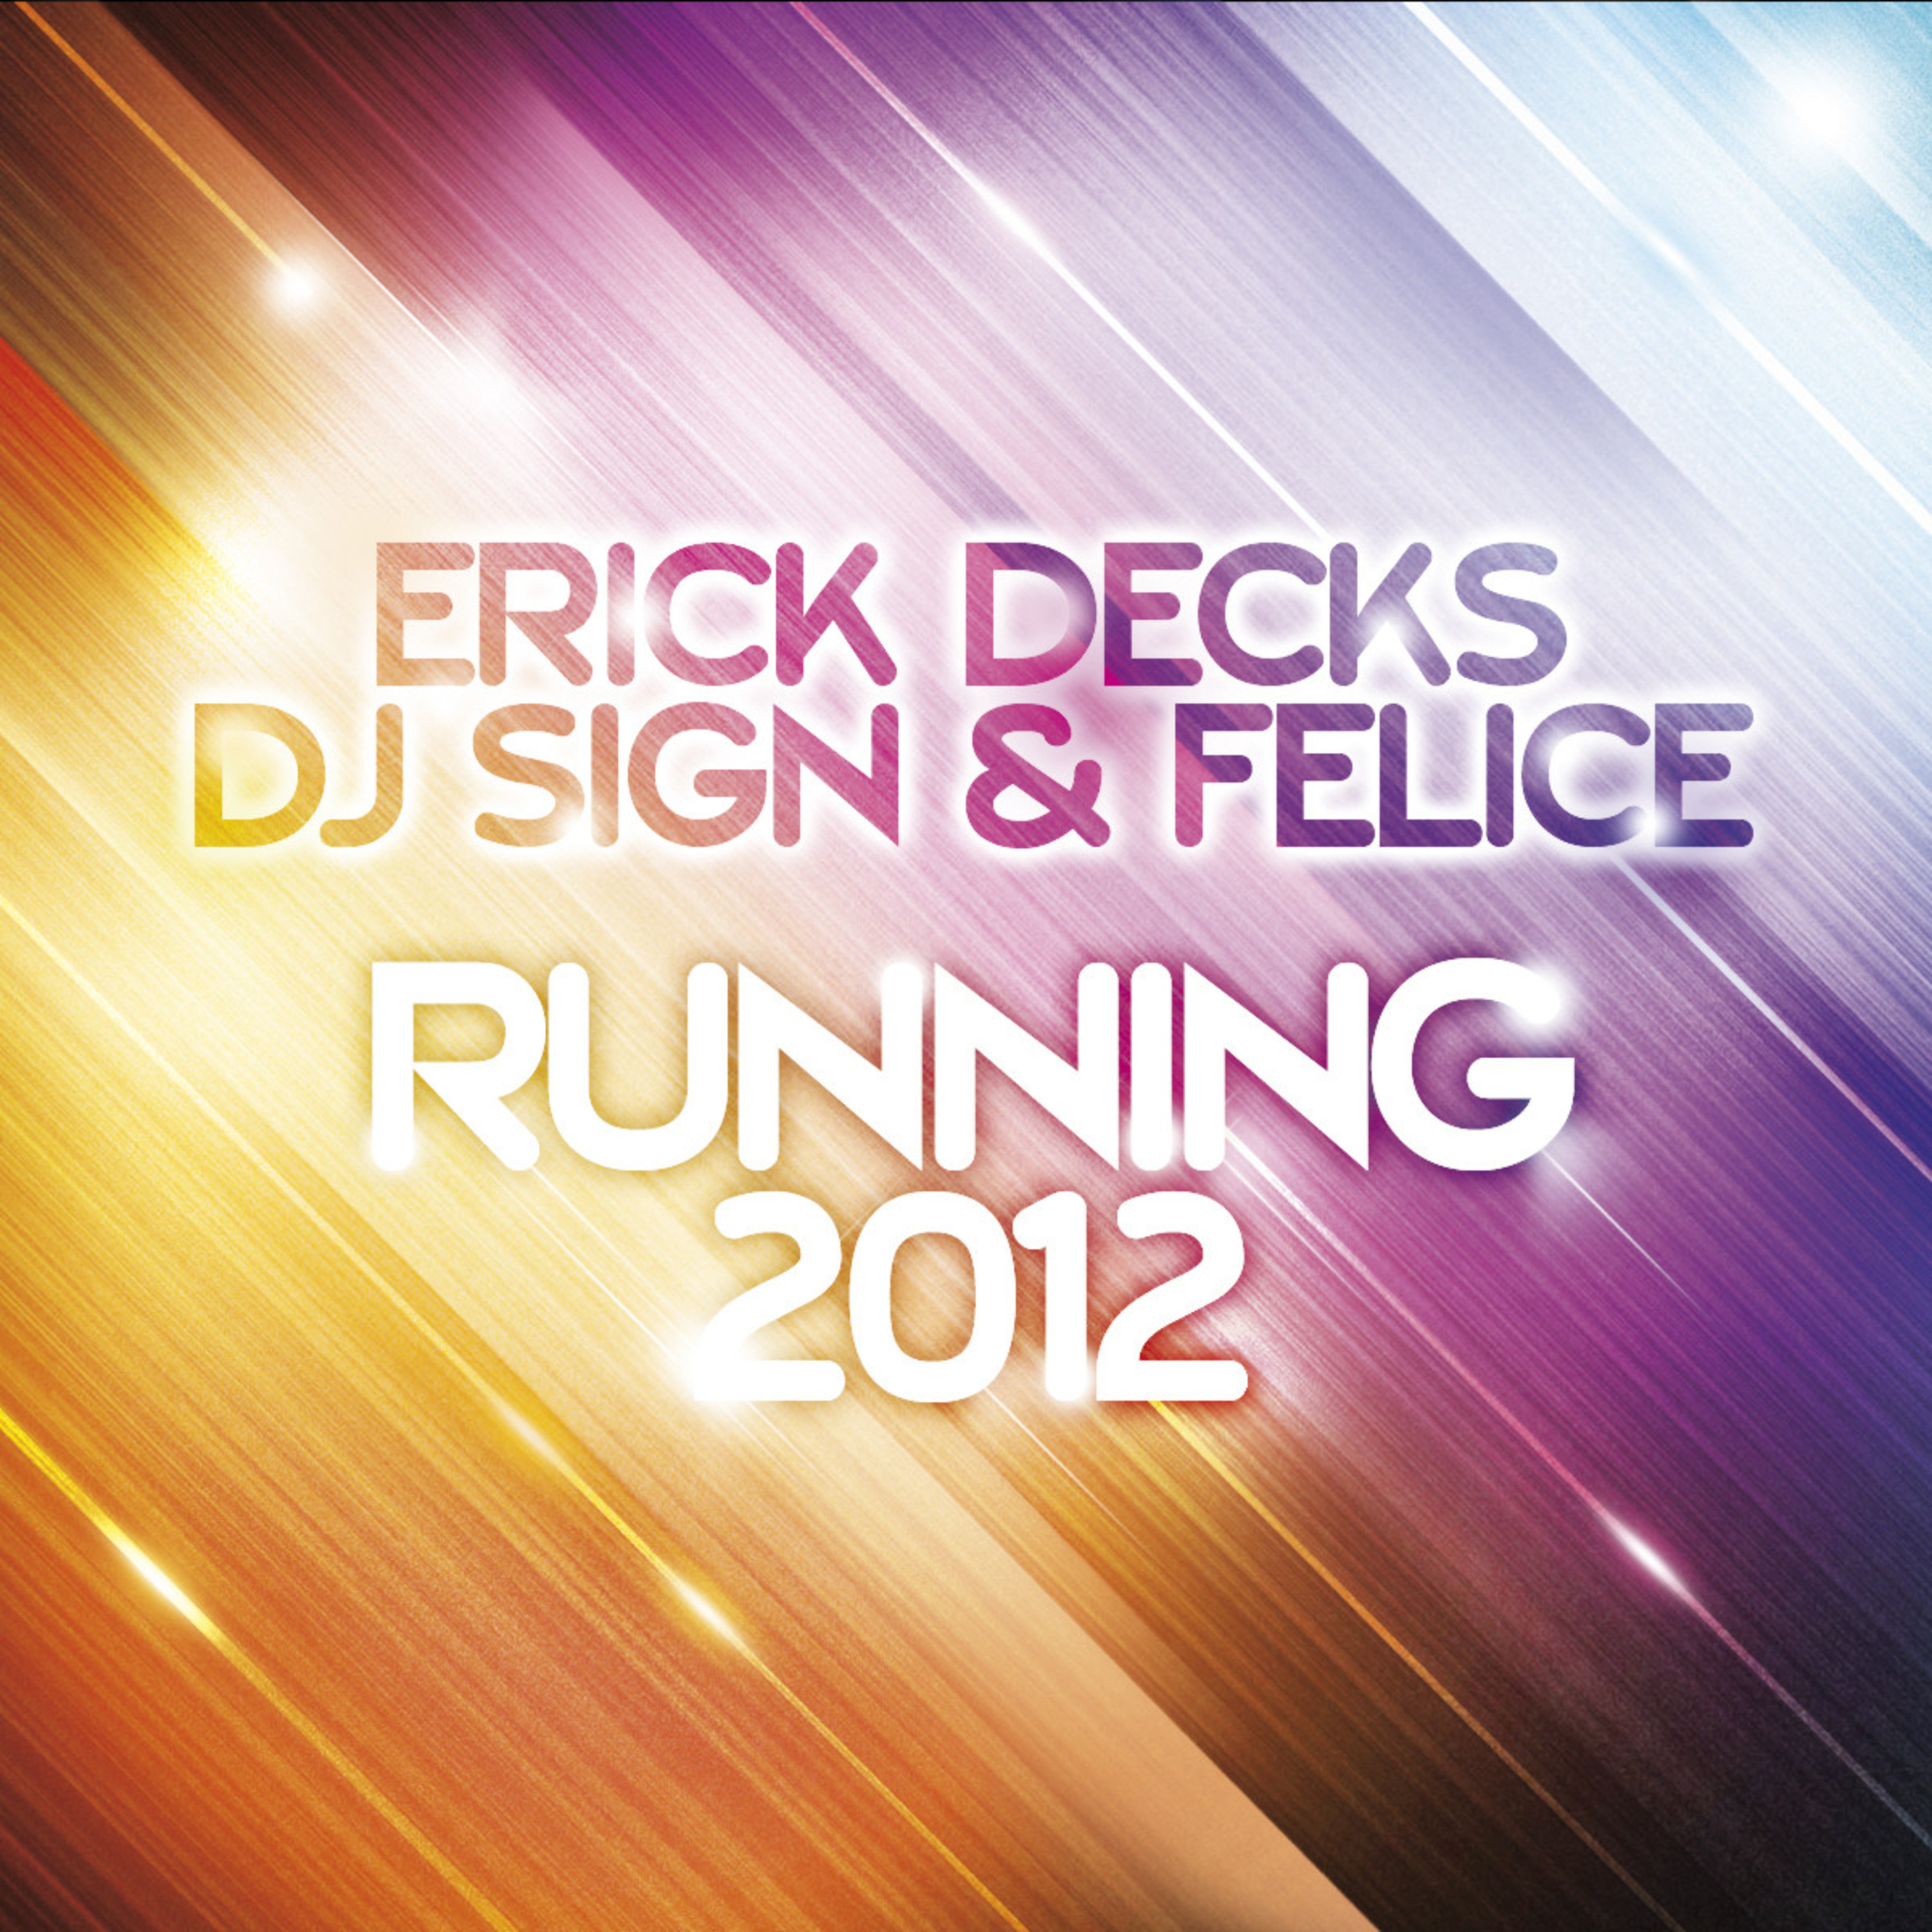 Running 2012 (Original Erick Decks Single Edit)